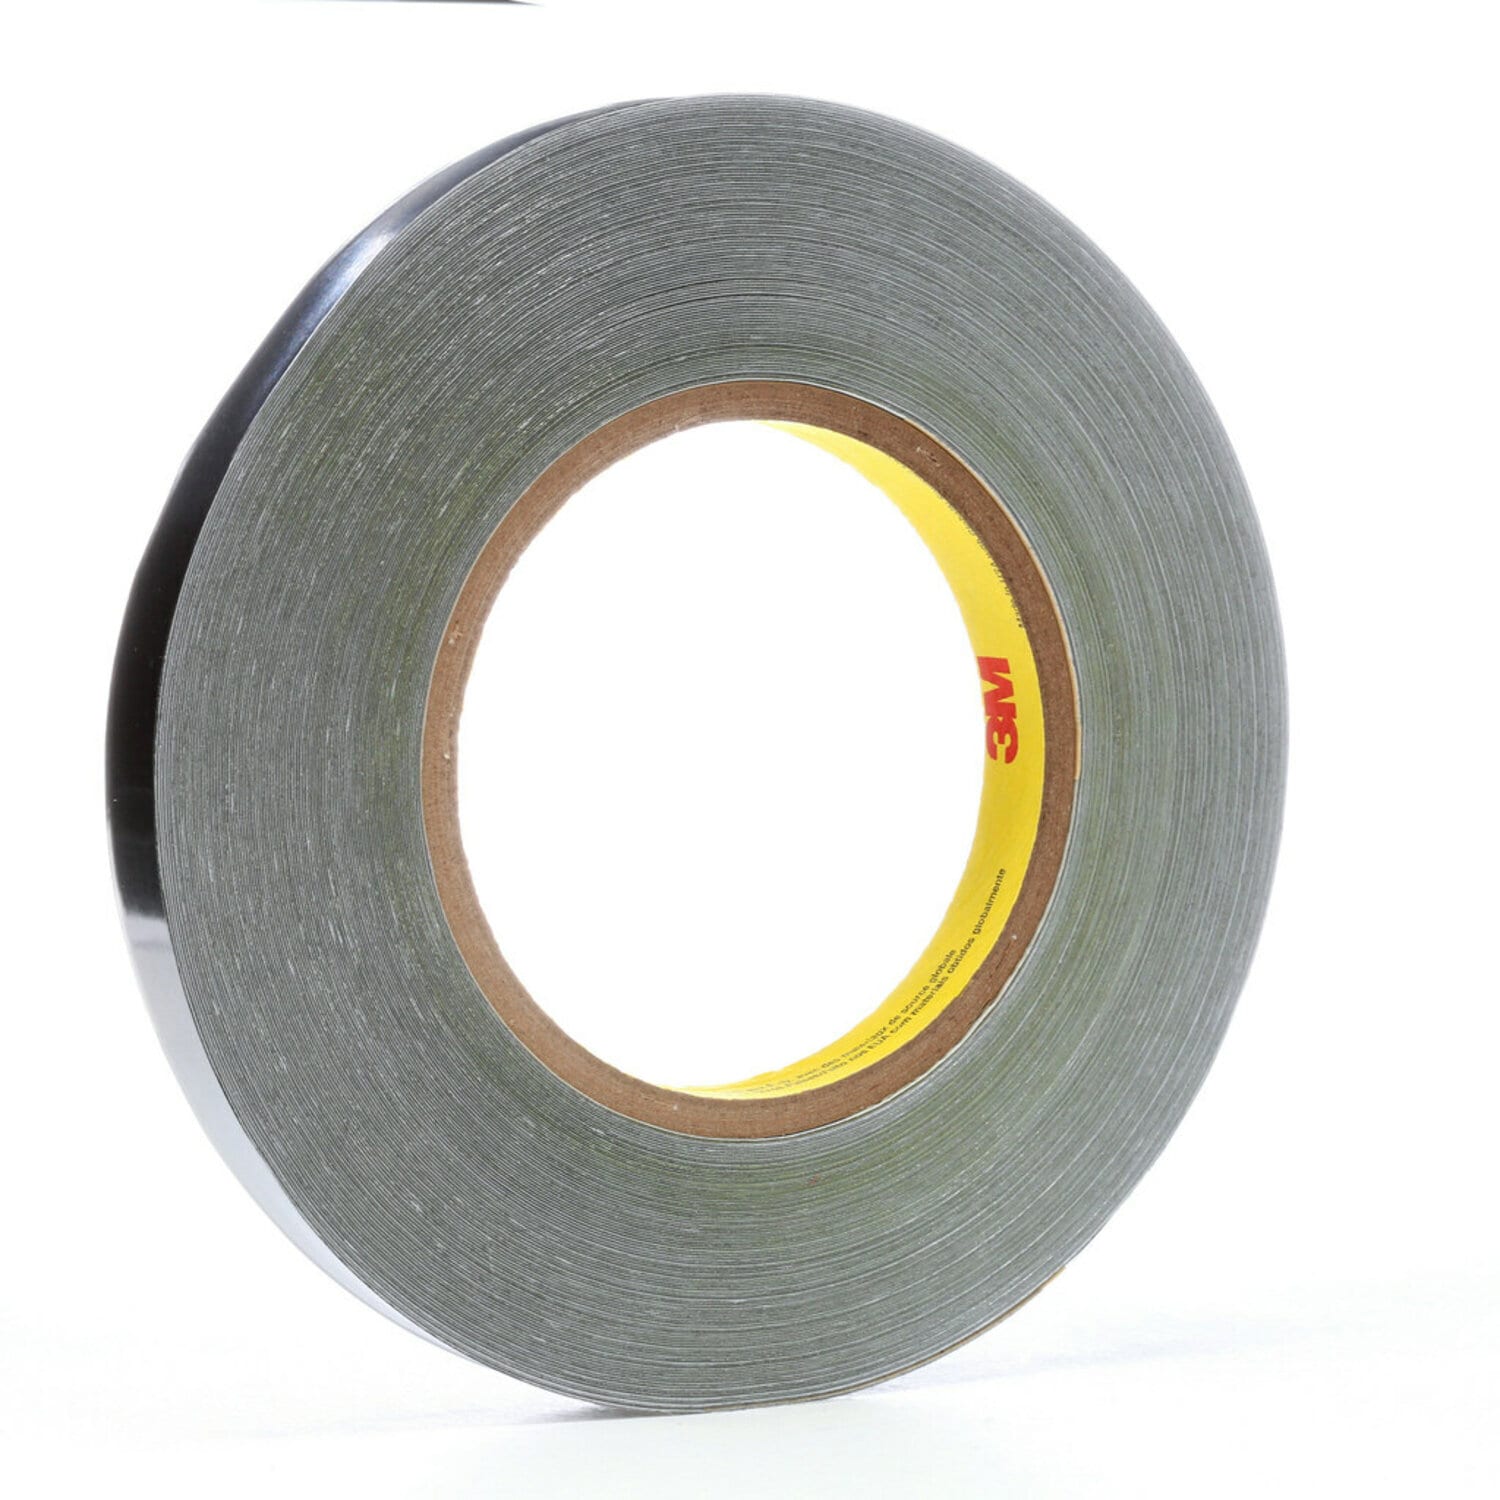 7000049101 - 3M Lead Foil Tape 420, Dark Silver, 1/2 in x 36 yd, 6.8 mil, 18 rolls
per case